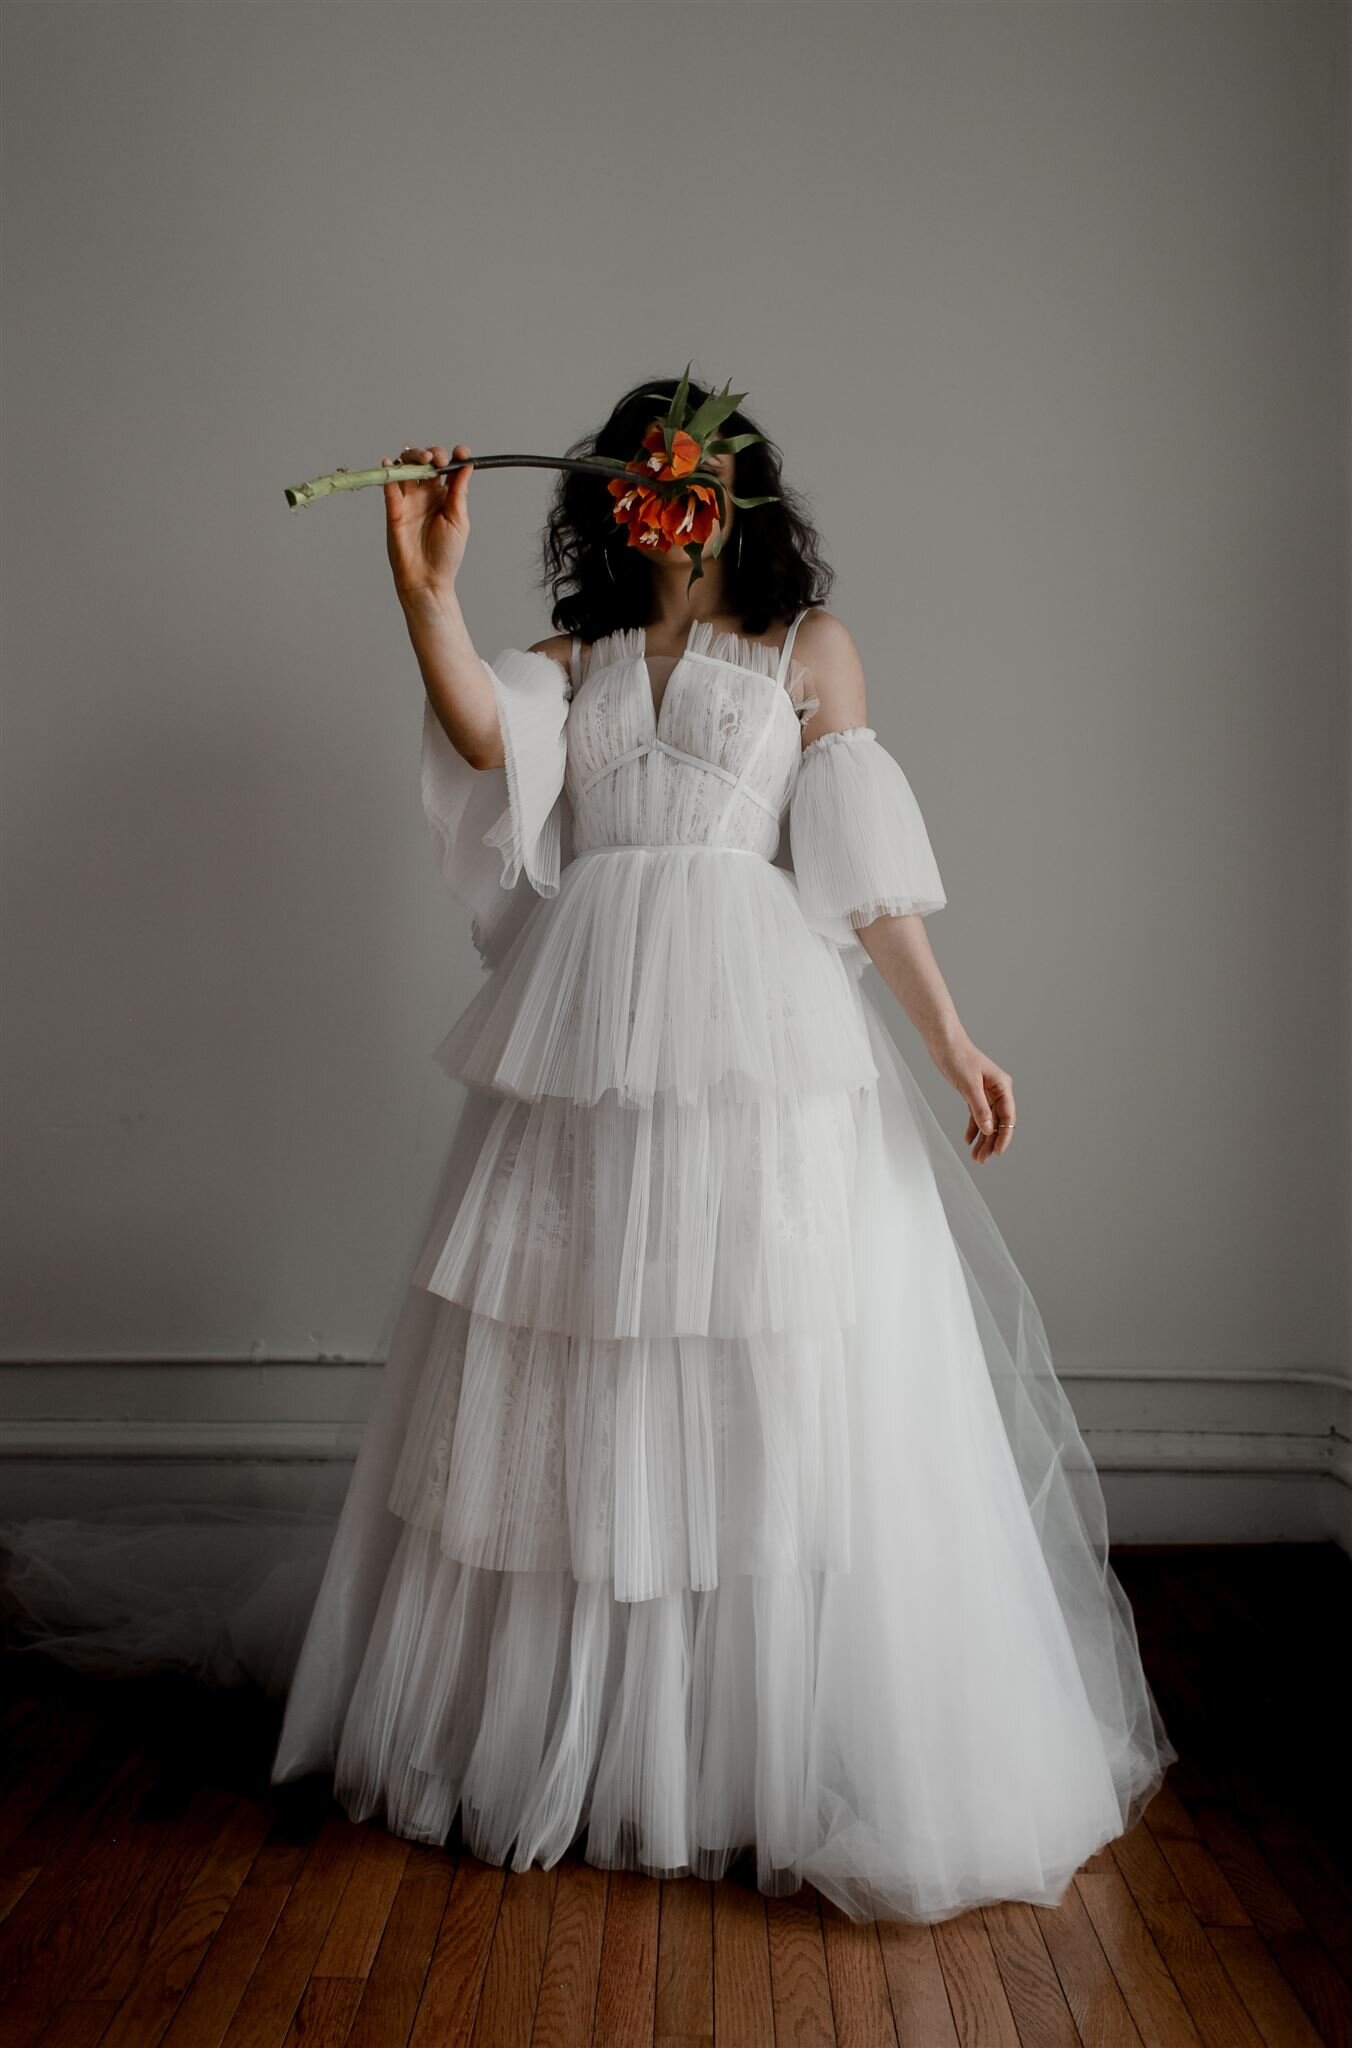 Chicago-Bride-Wedding-Dress-Varca-Edited-602_websize.jpg